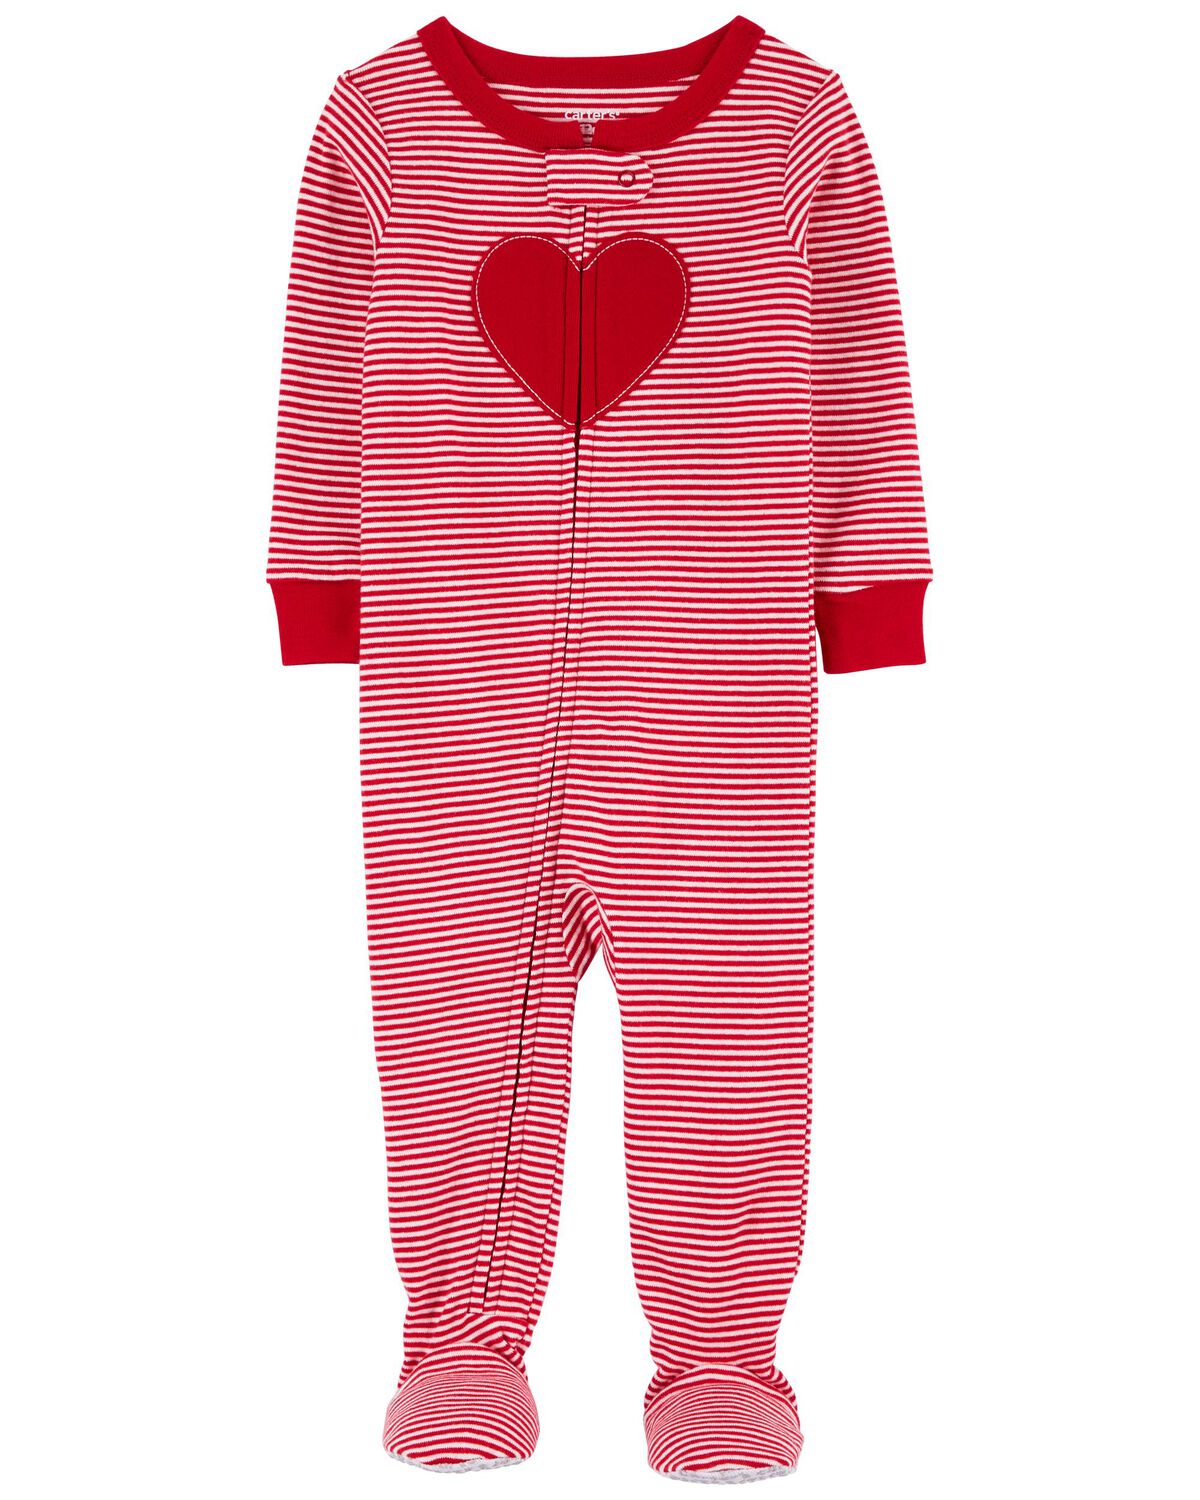 Baby 1-Piece Valentine's Day 100% Snug Fit Cotton Footie Pajamas